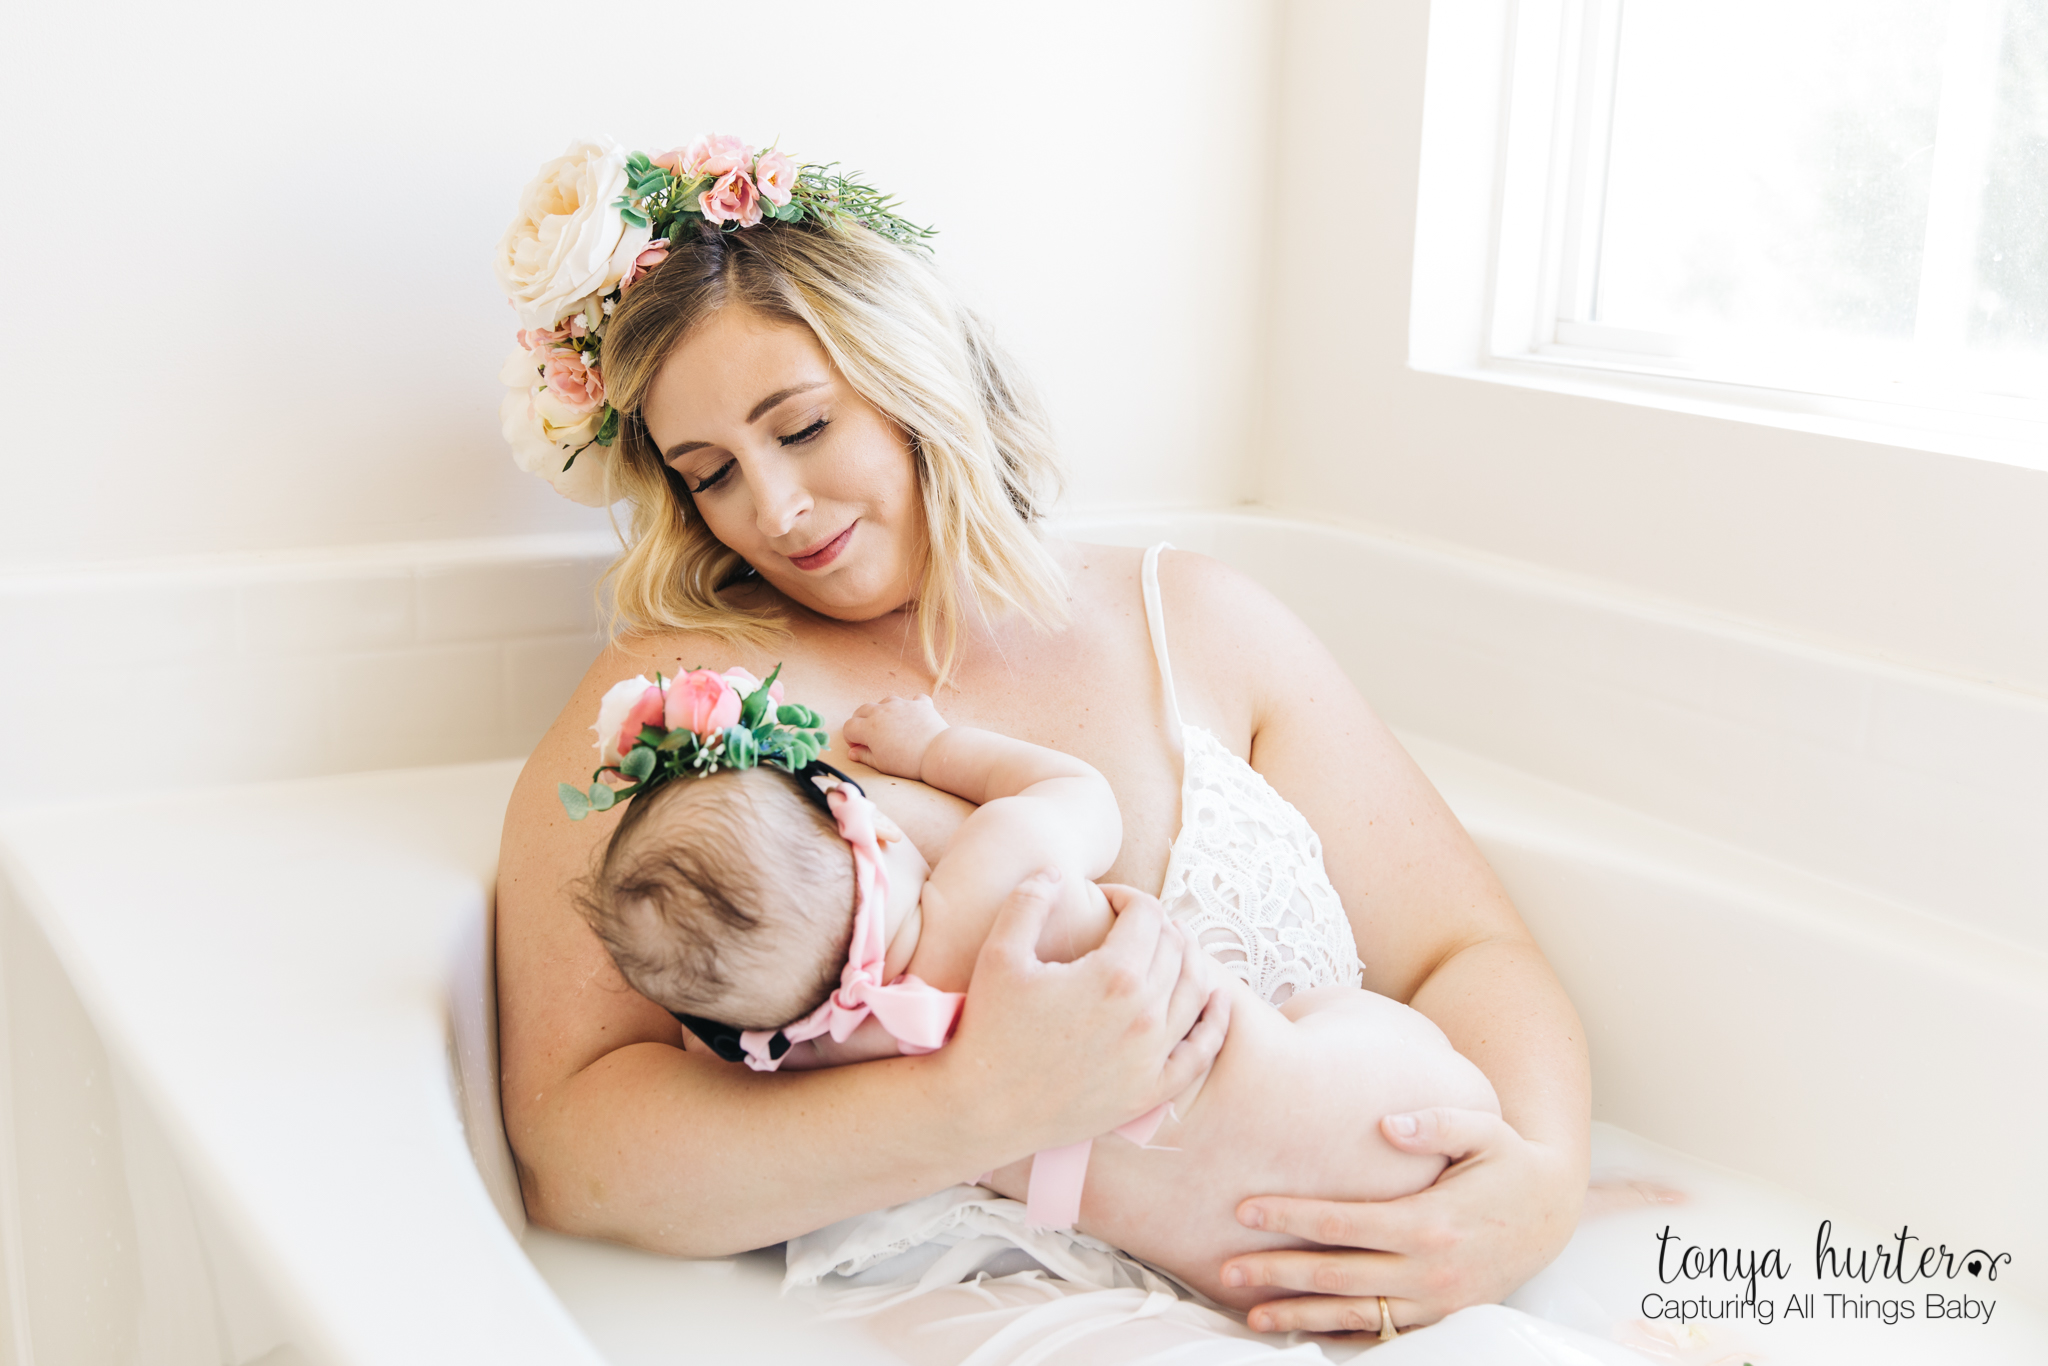 Mother and baby milk bath photo shoot Tonya hurter photography 2017